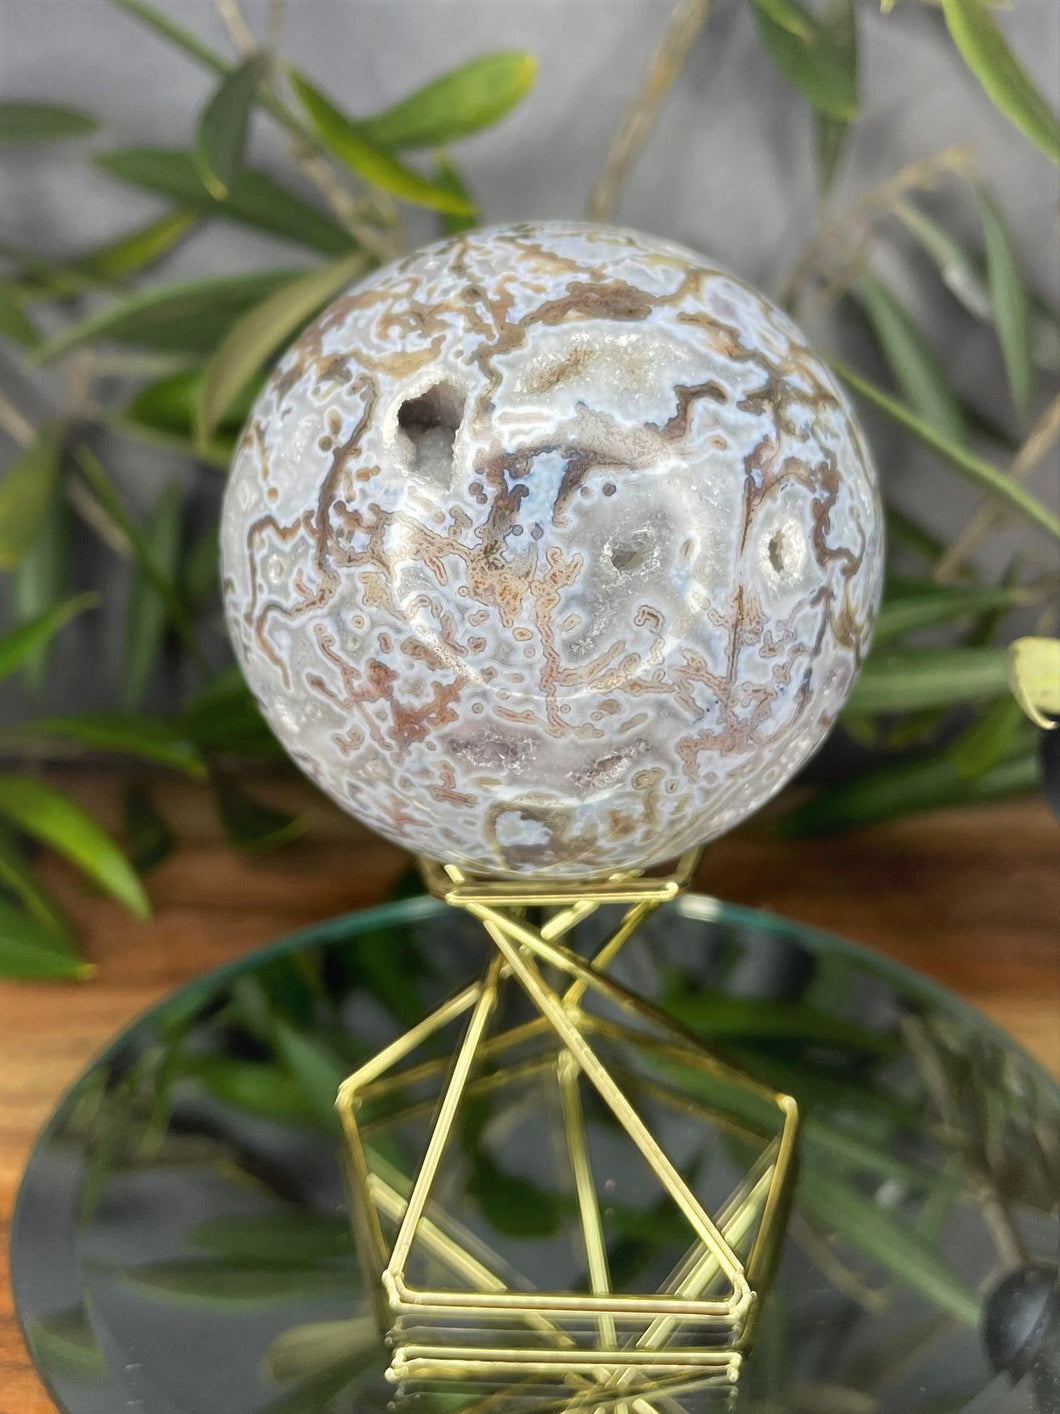 Unique Moss Agate With Quartz Inclusions Crystal Sphere